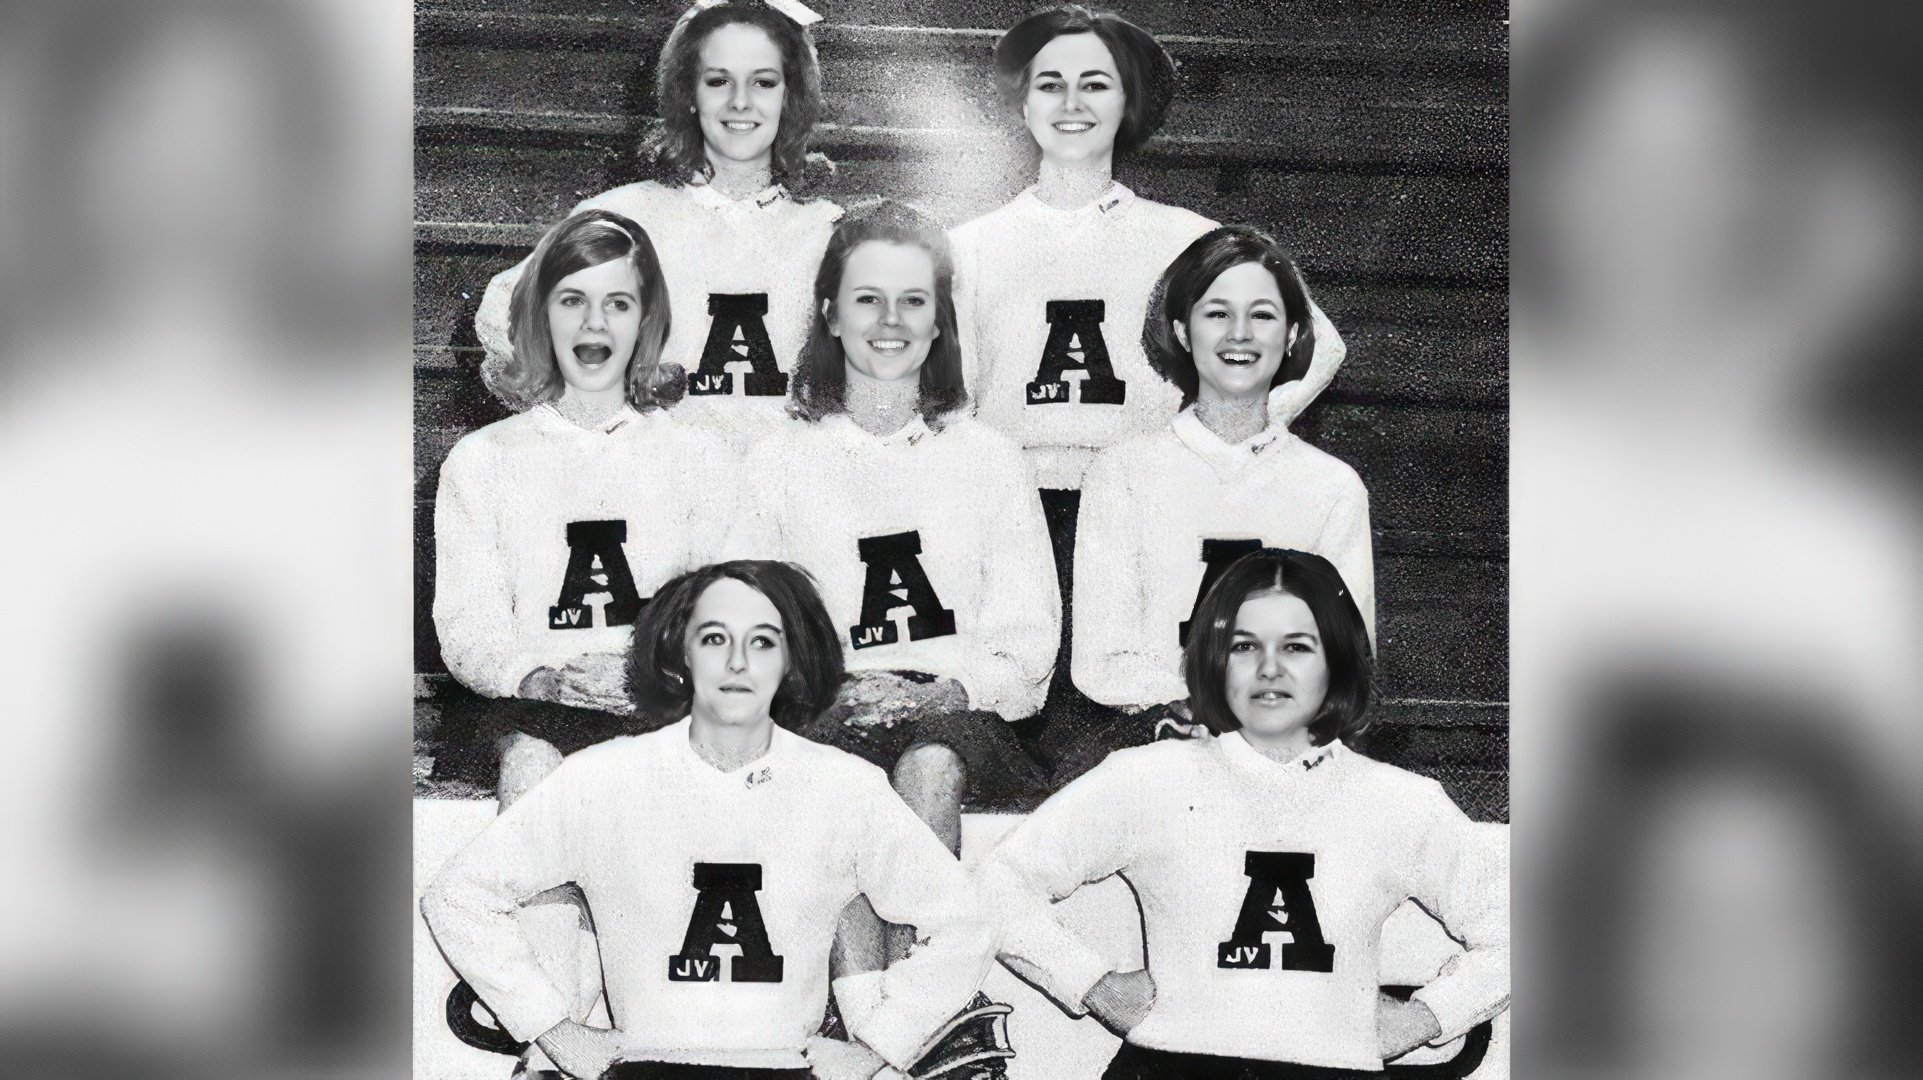 Kim Basinger (center) in the cheerleading squad